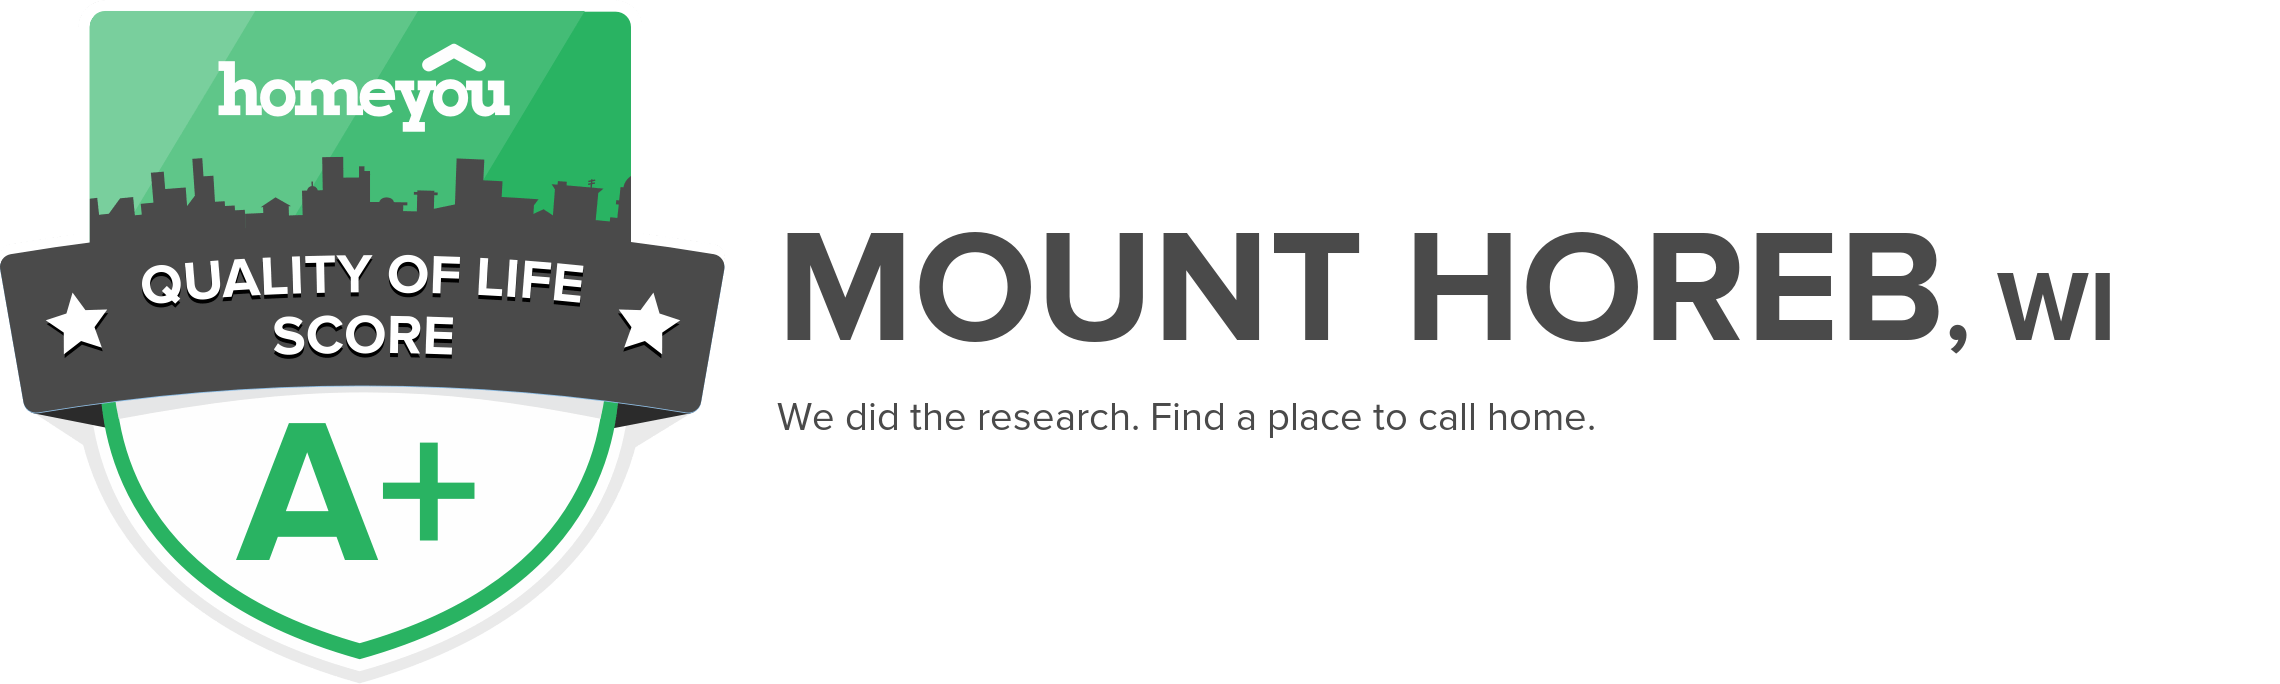 Mount Horeb, WI